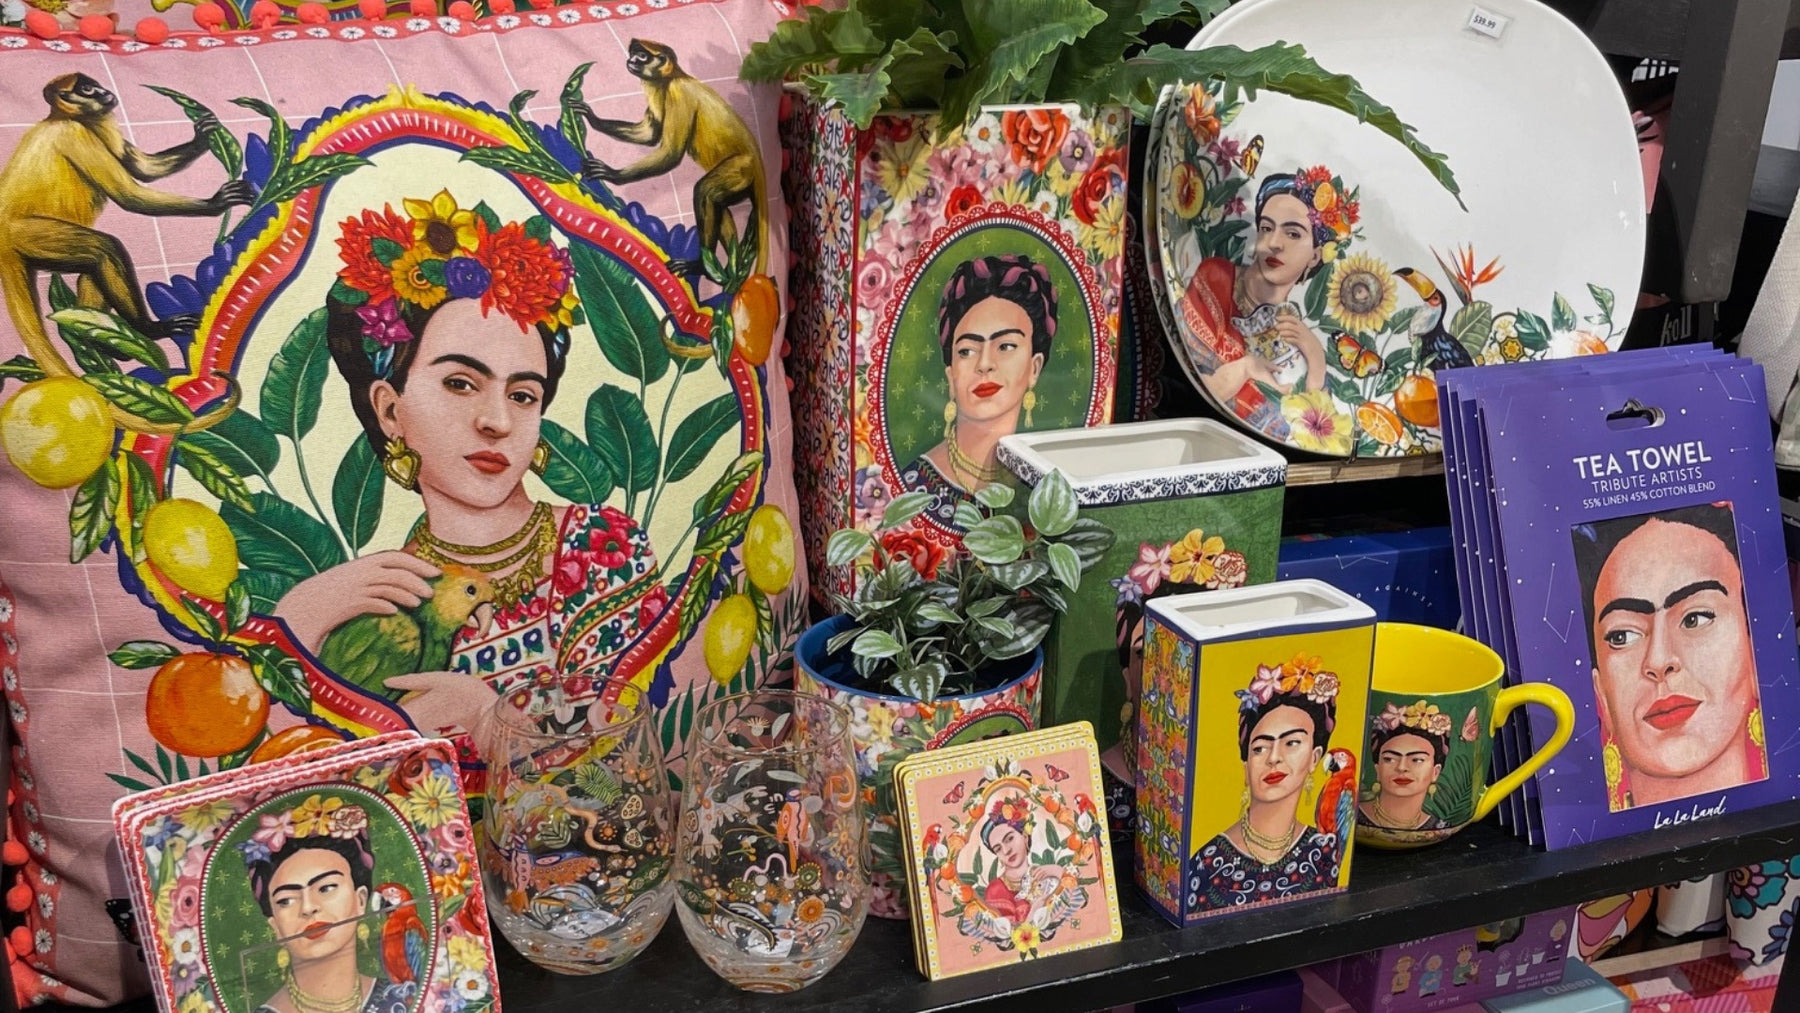 Frida Kahlo gifts on display